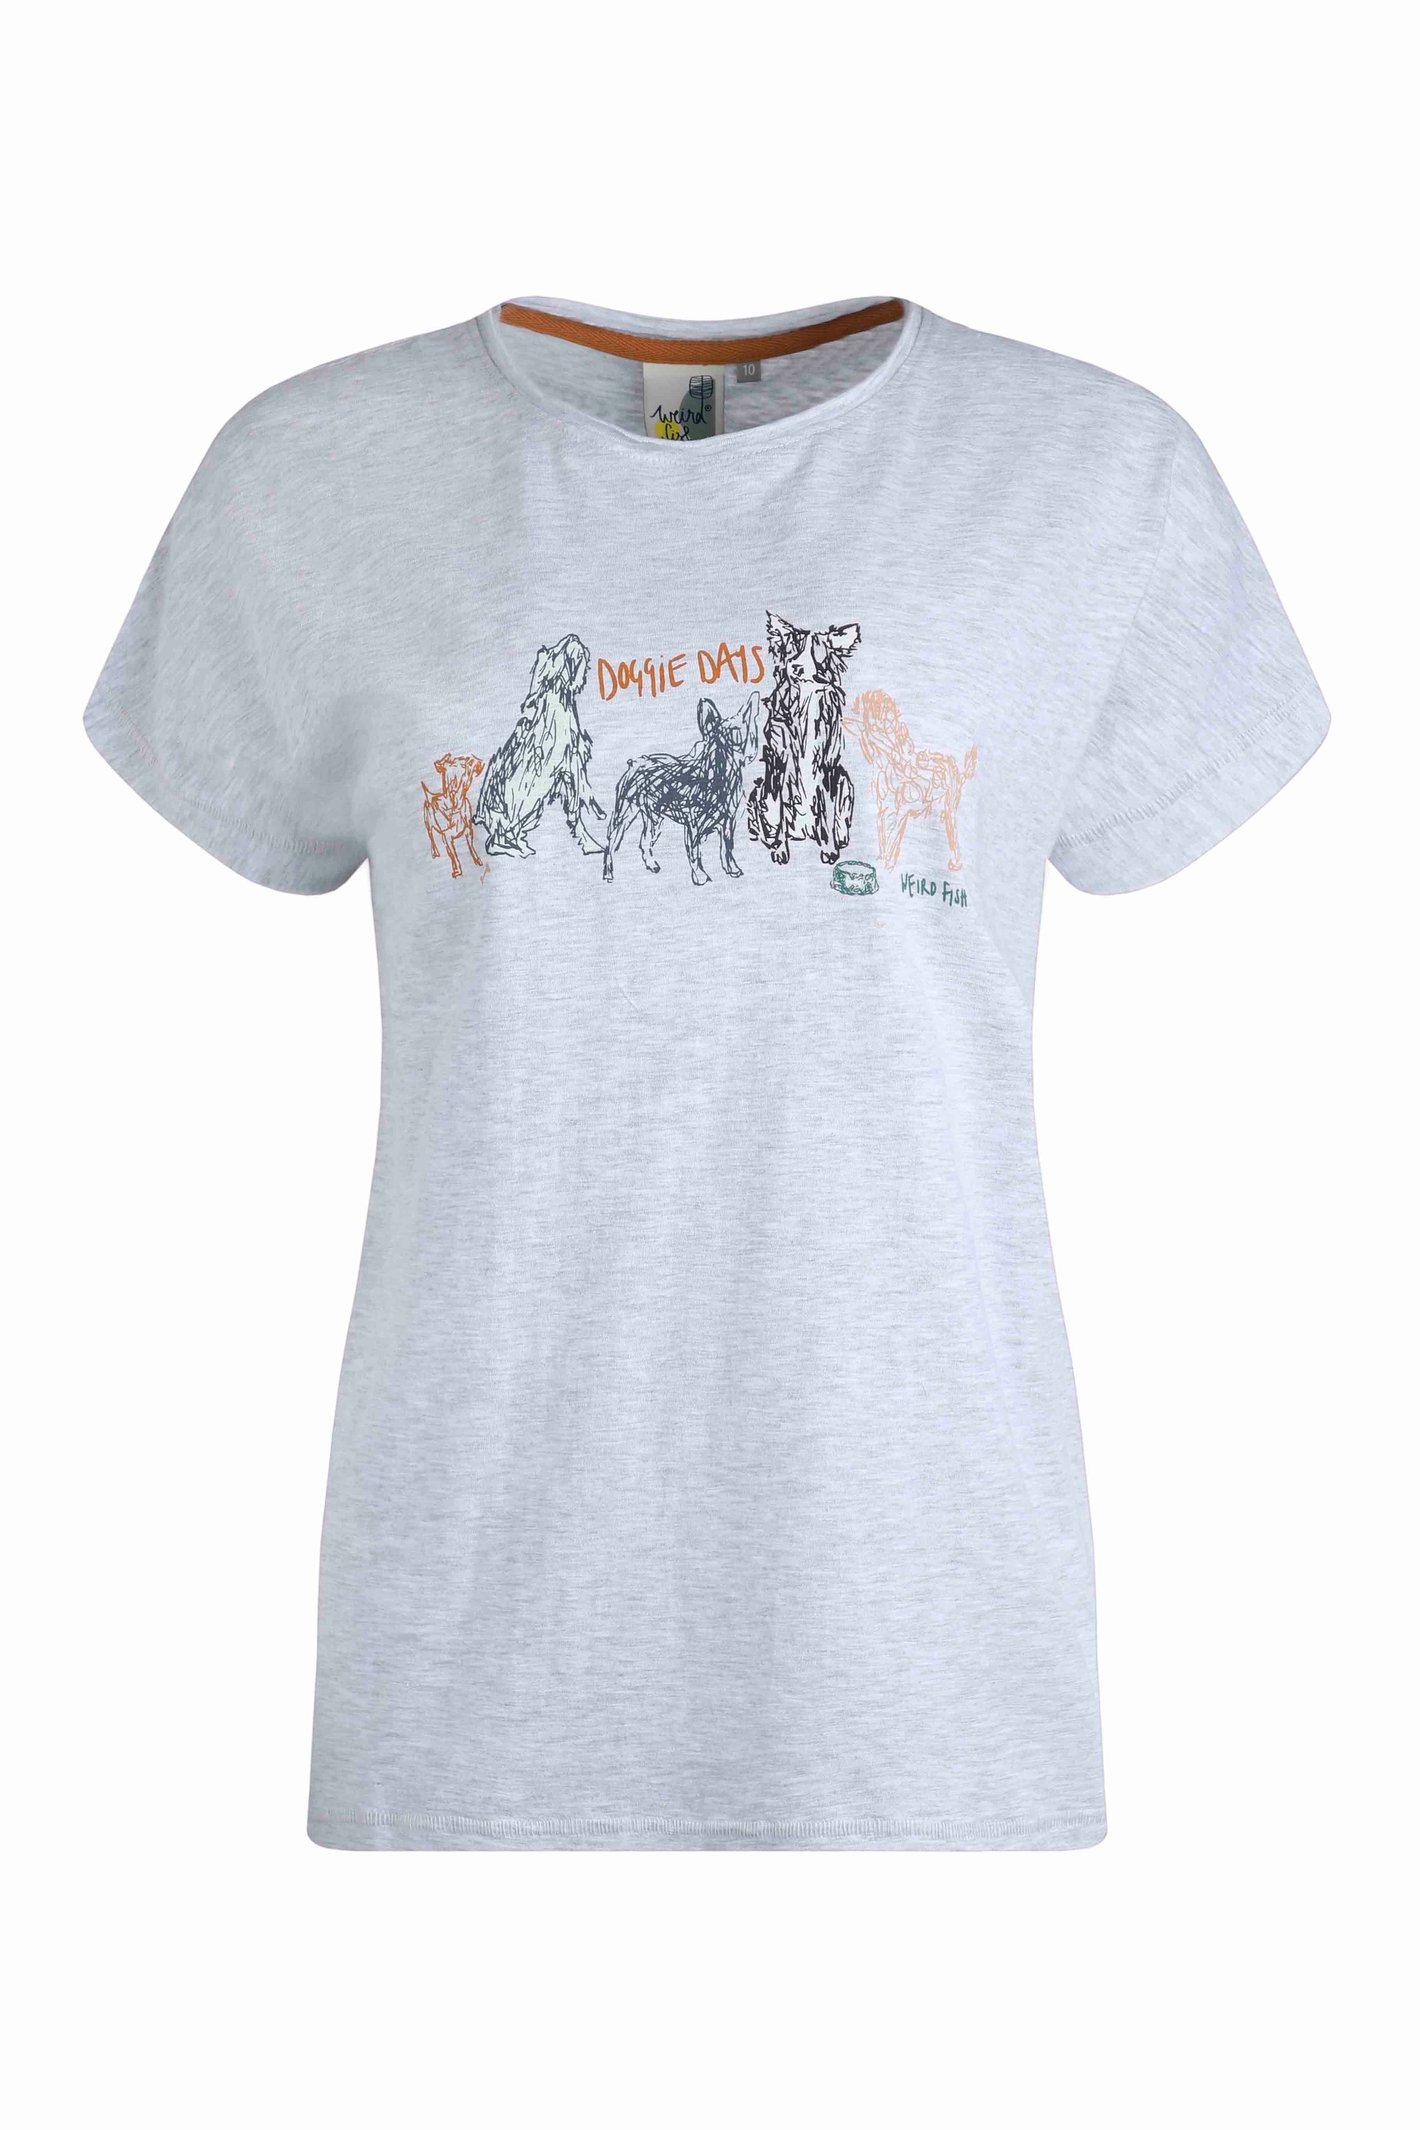 Weird Fish Doggie Day Organic Graphic T-Shirt Grey Marl Size 18